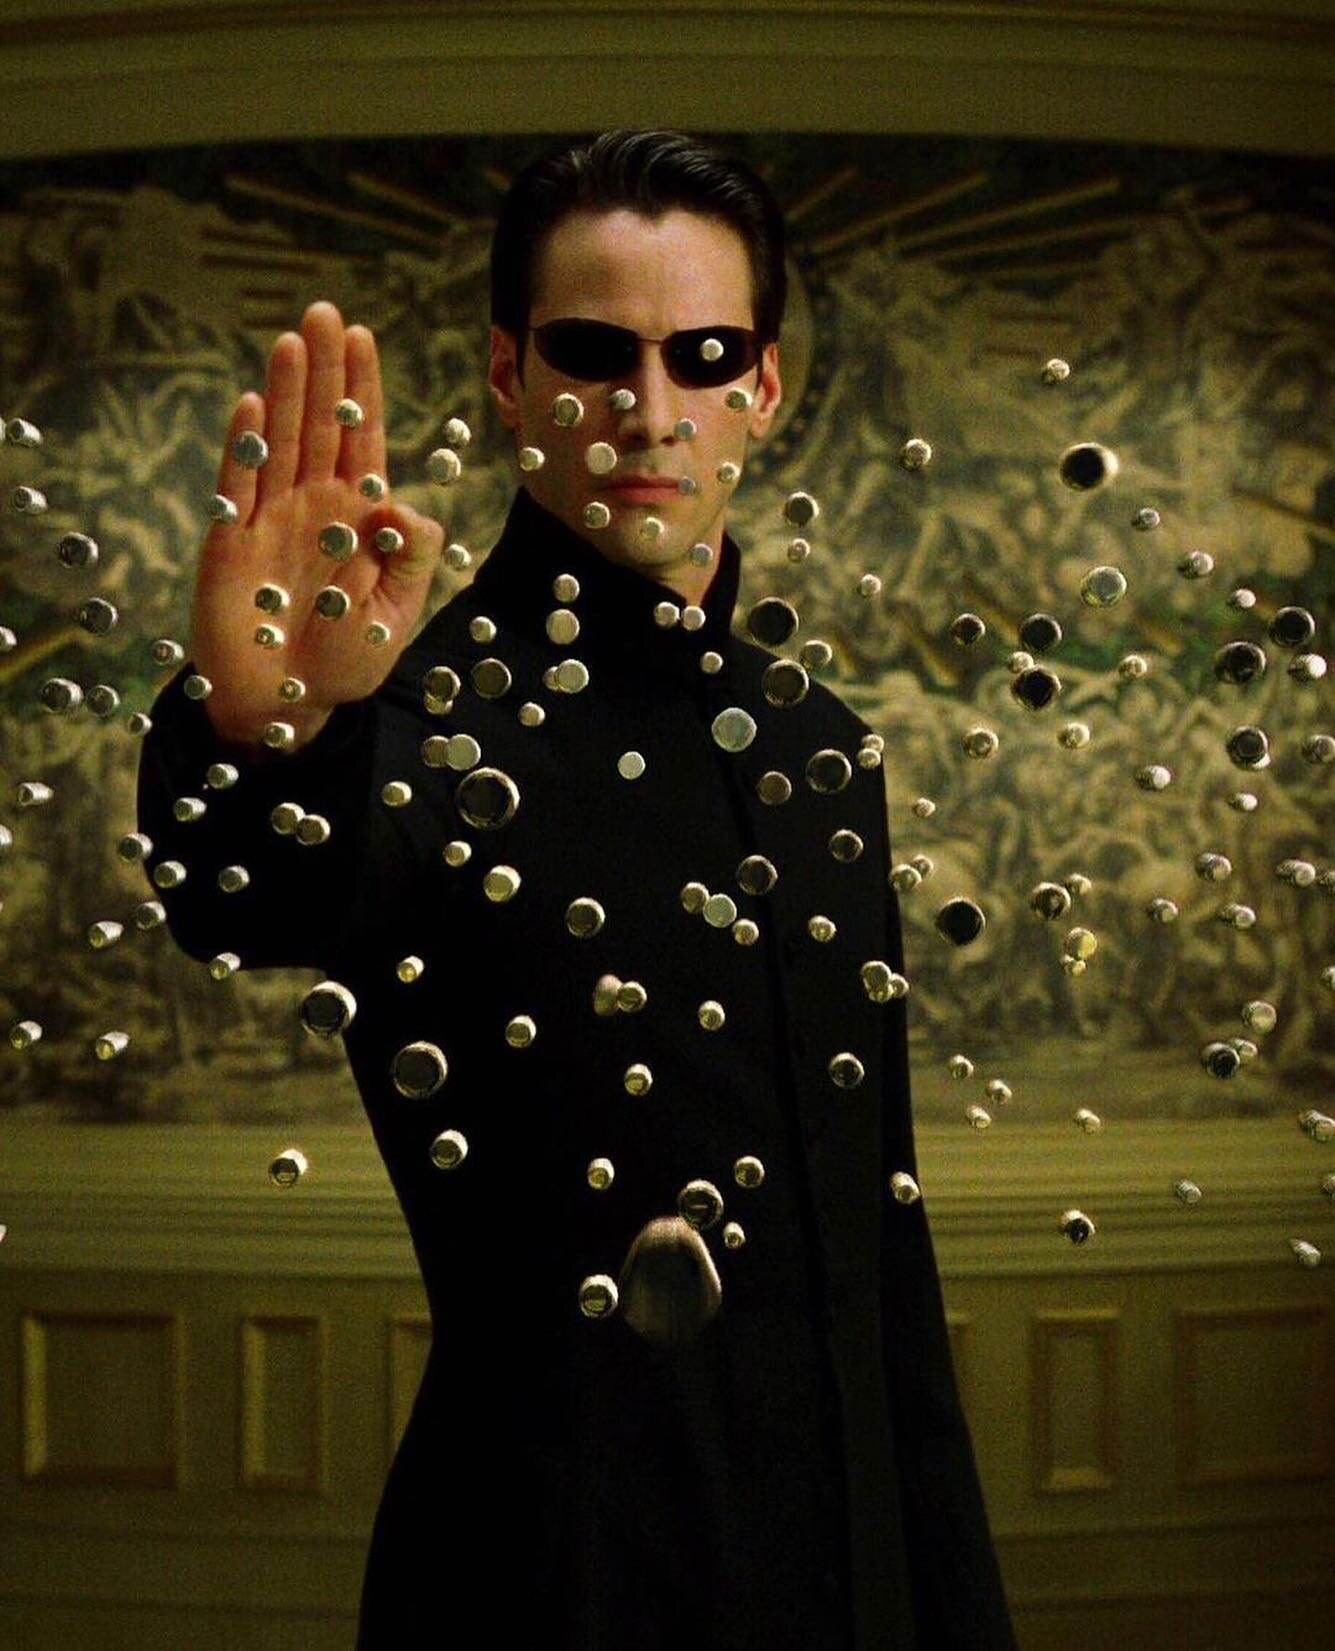 Red pill.

The Matrix
Release date: March 31, 1999
Directors: Lana Wachowski, Lilly Wachowski
Budget: $63 million

#thematrix #matrix #neo #theone #keanureeves #redpill #bluepill #film #warnerbros #90s #90smovies #90sfilm #film #filming #movie #movie